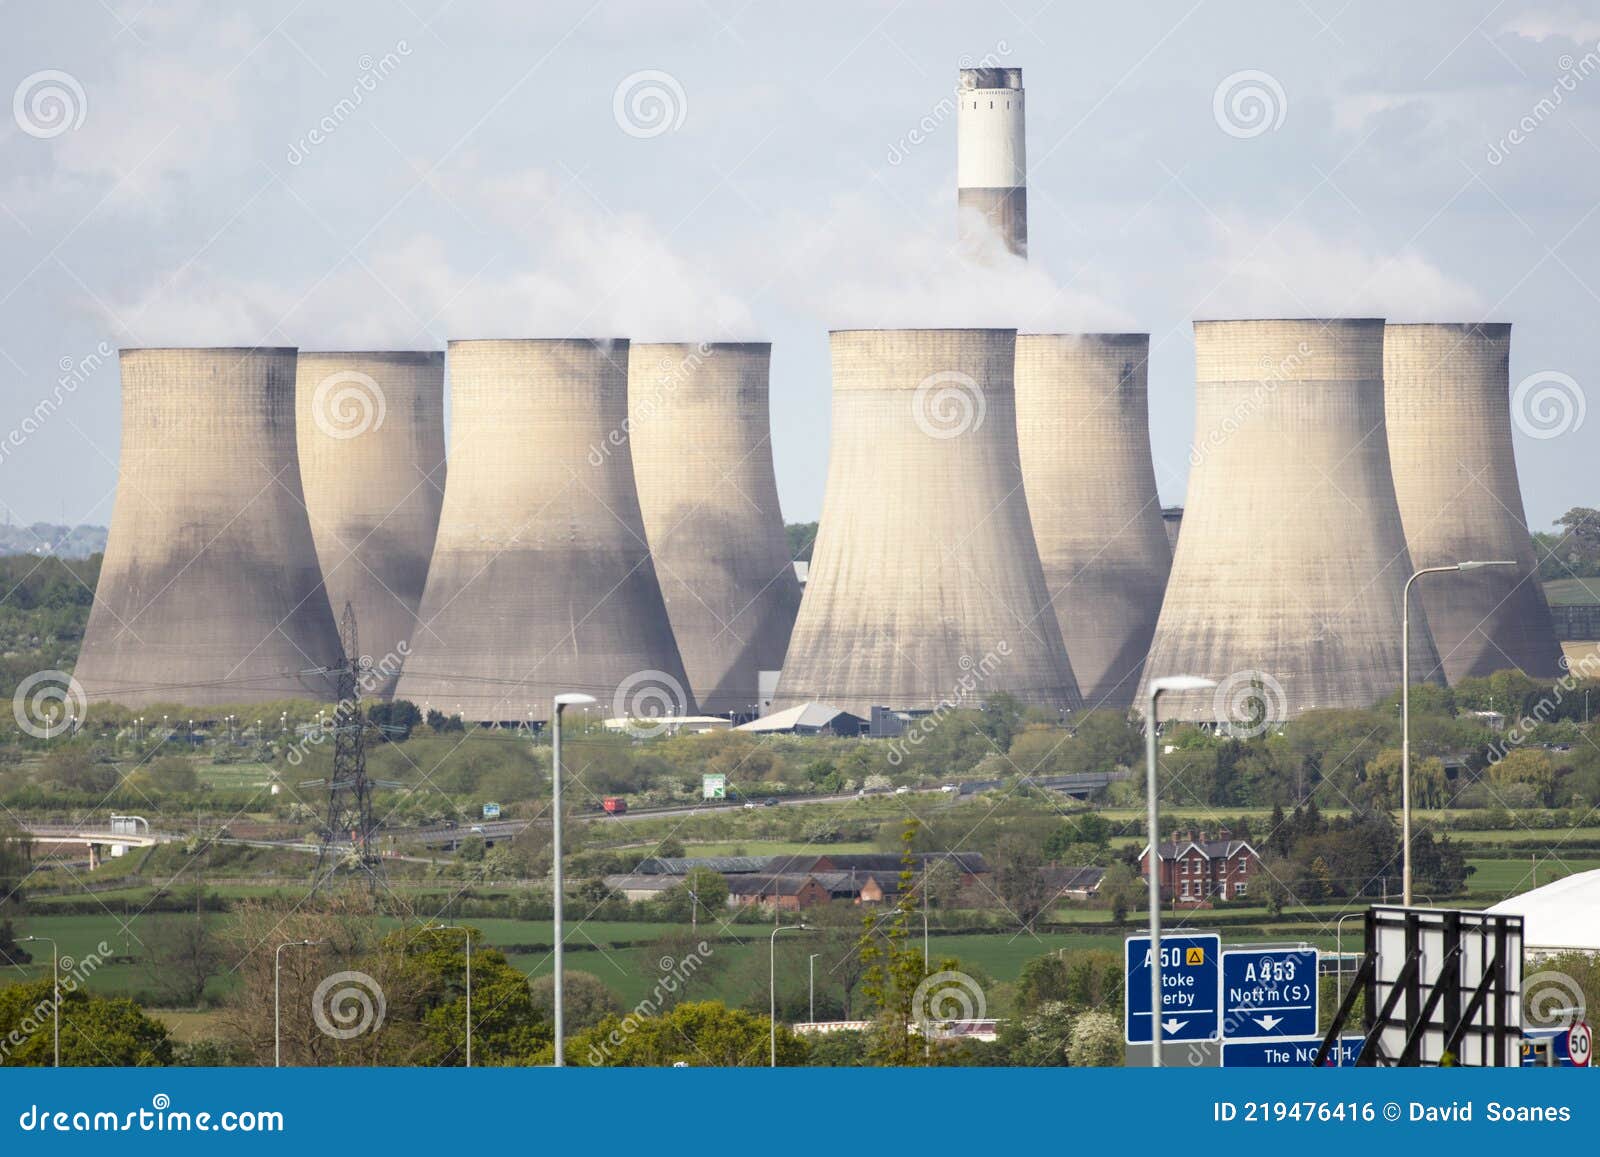 ratcliffe-on-soar power station stock - photo